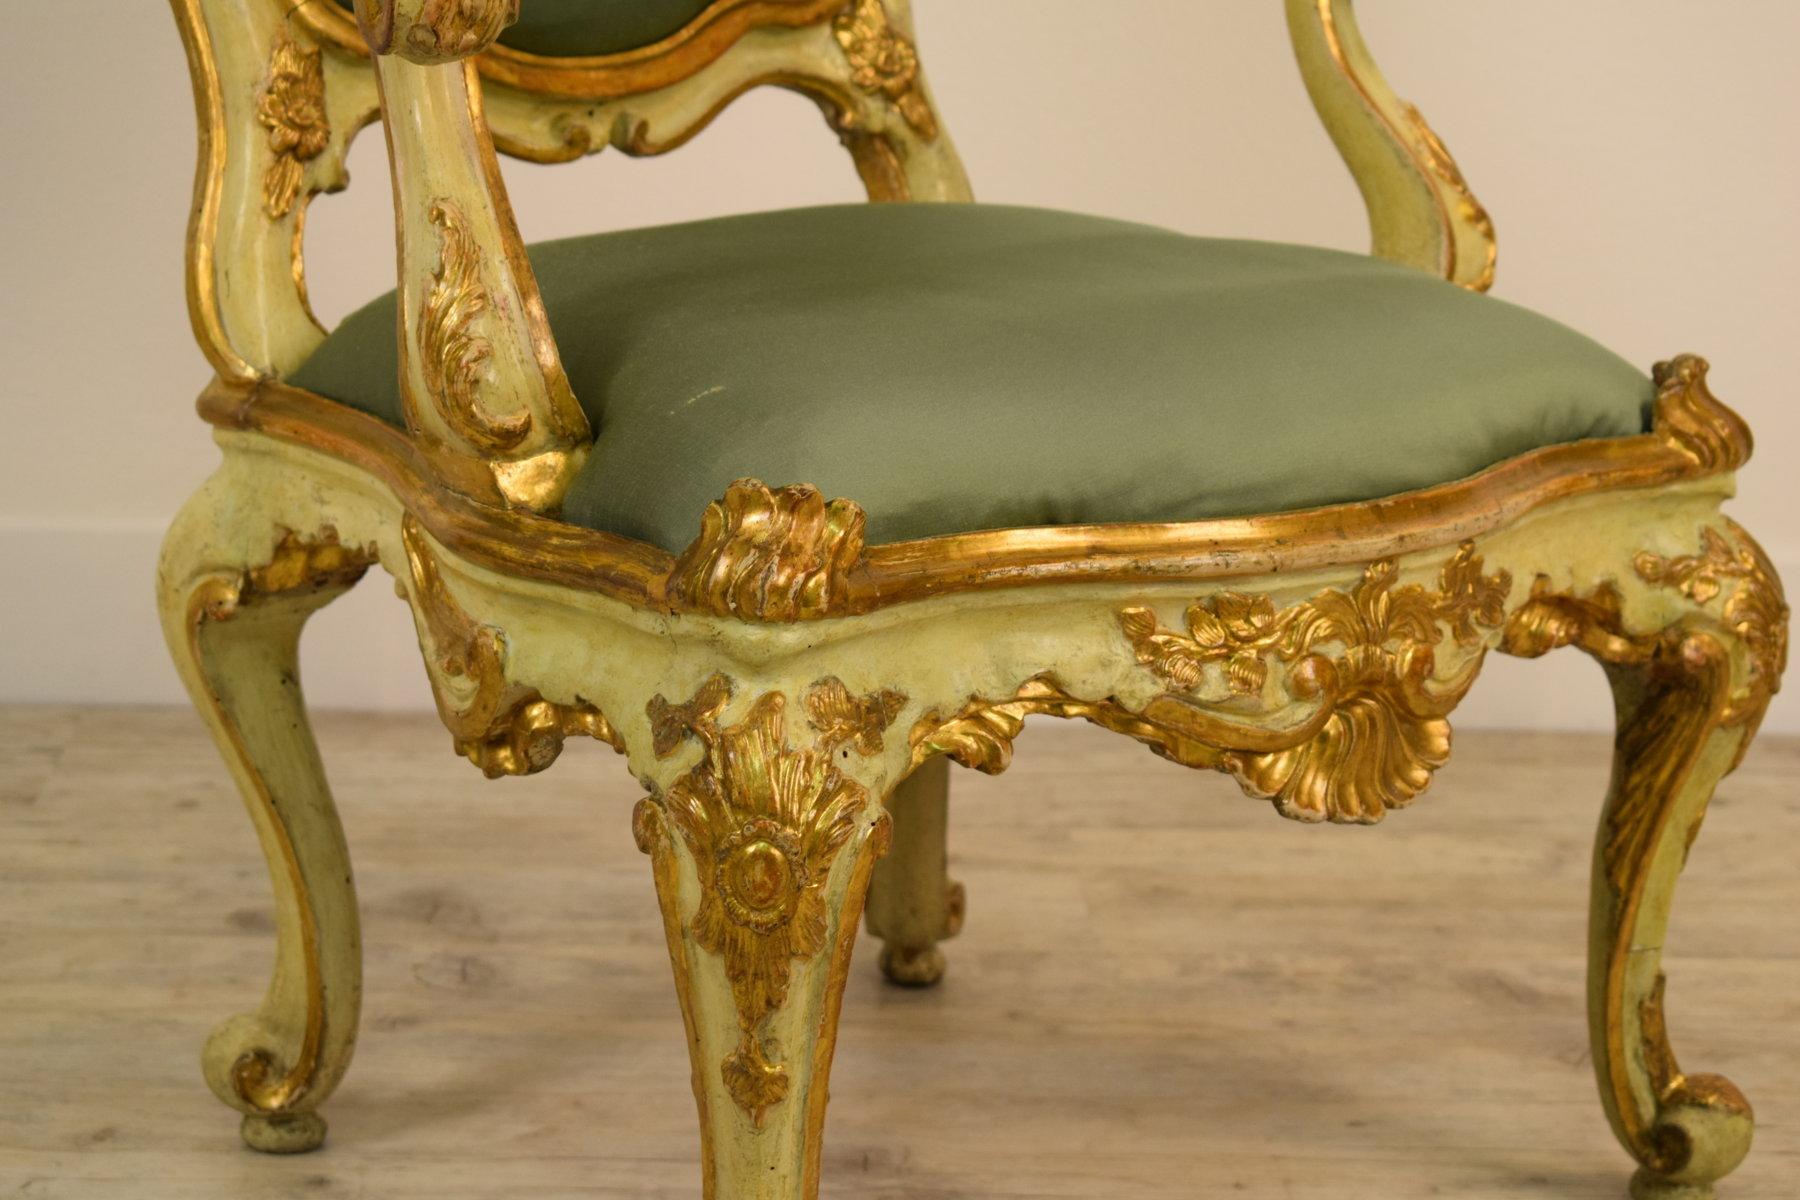 18th Century Venetian Lacquered and Gilded Wood Armchair (Handgeschnitzt)